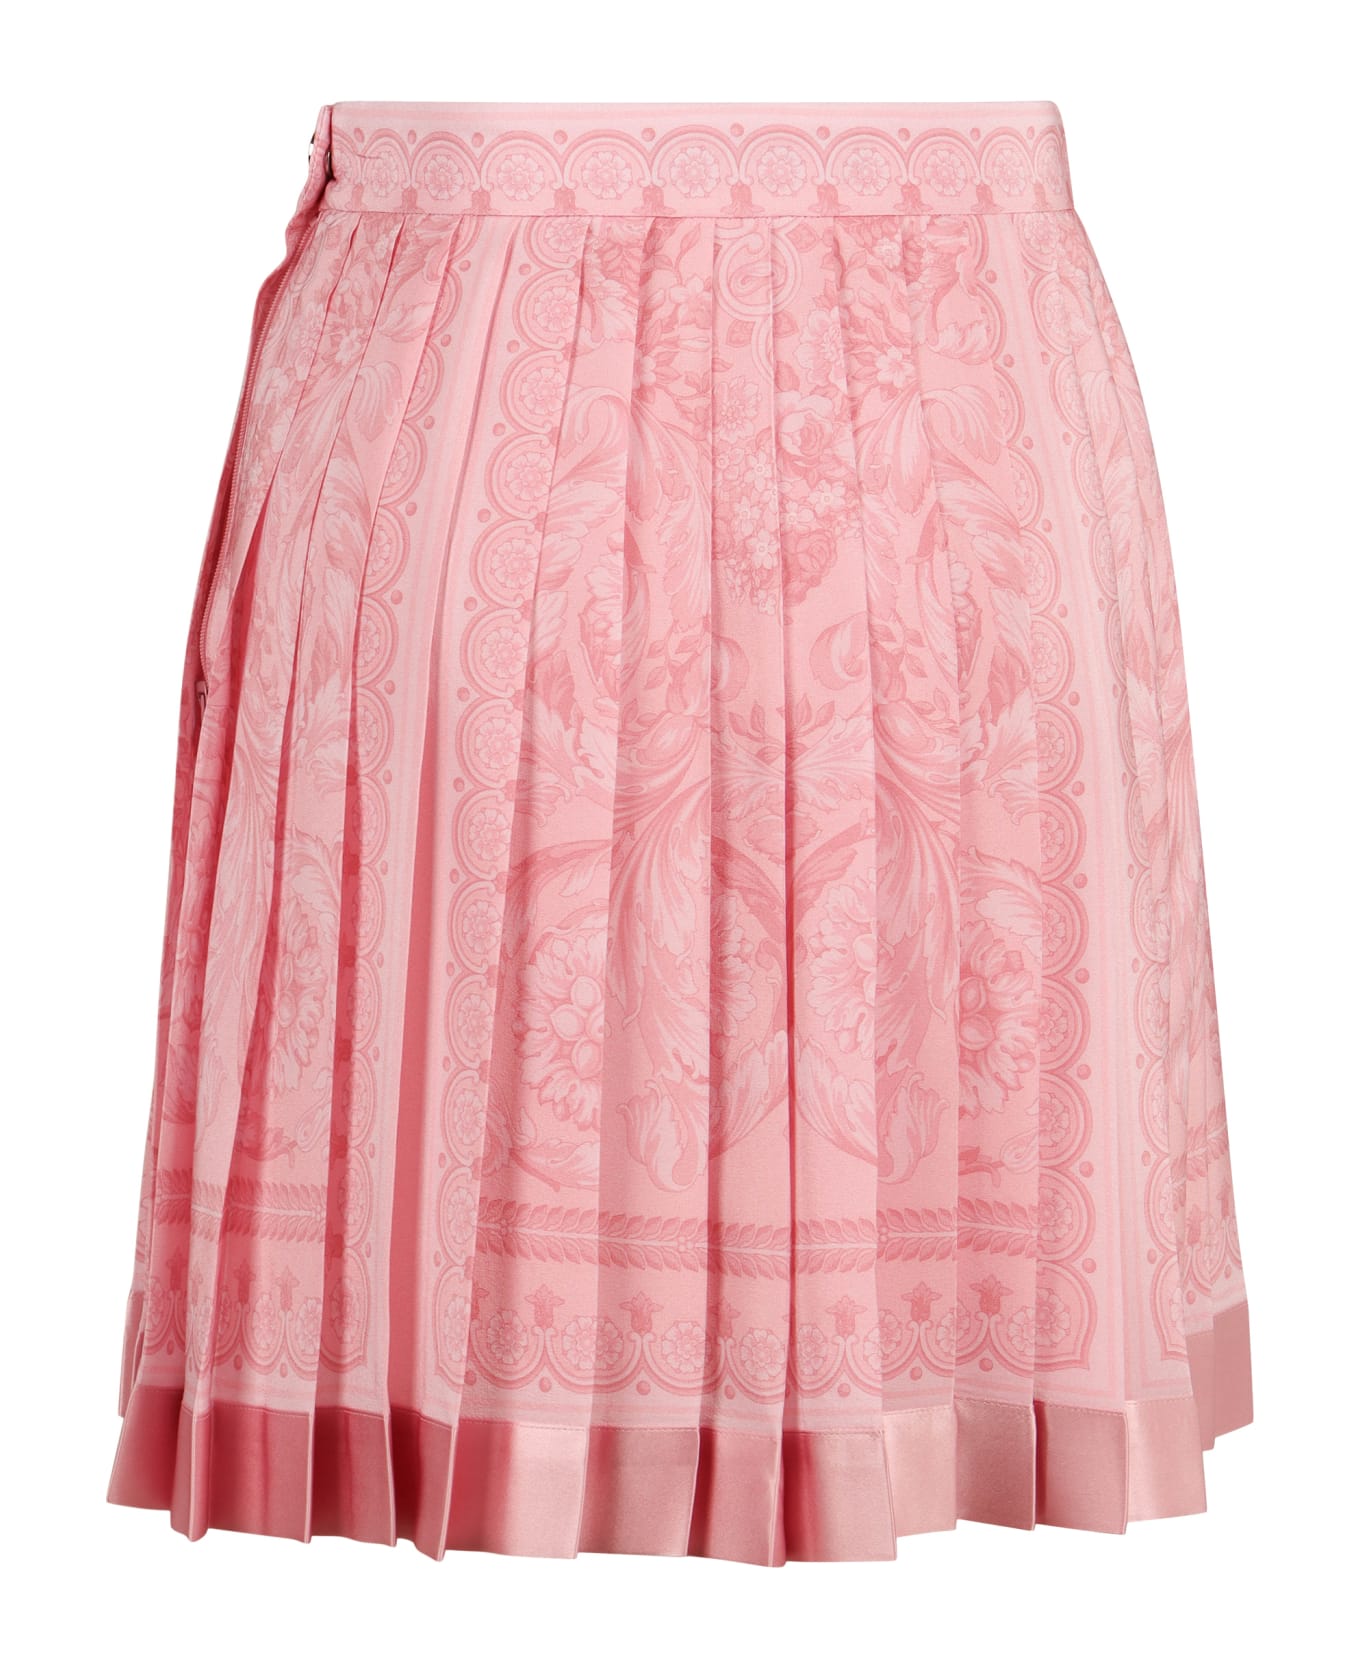 Versace Printed Silk Skirt - Pink